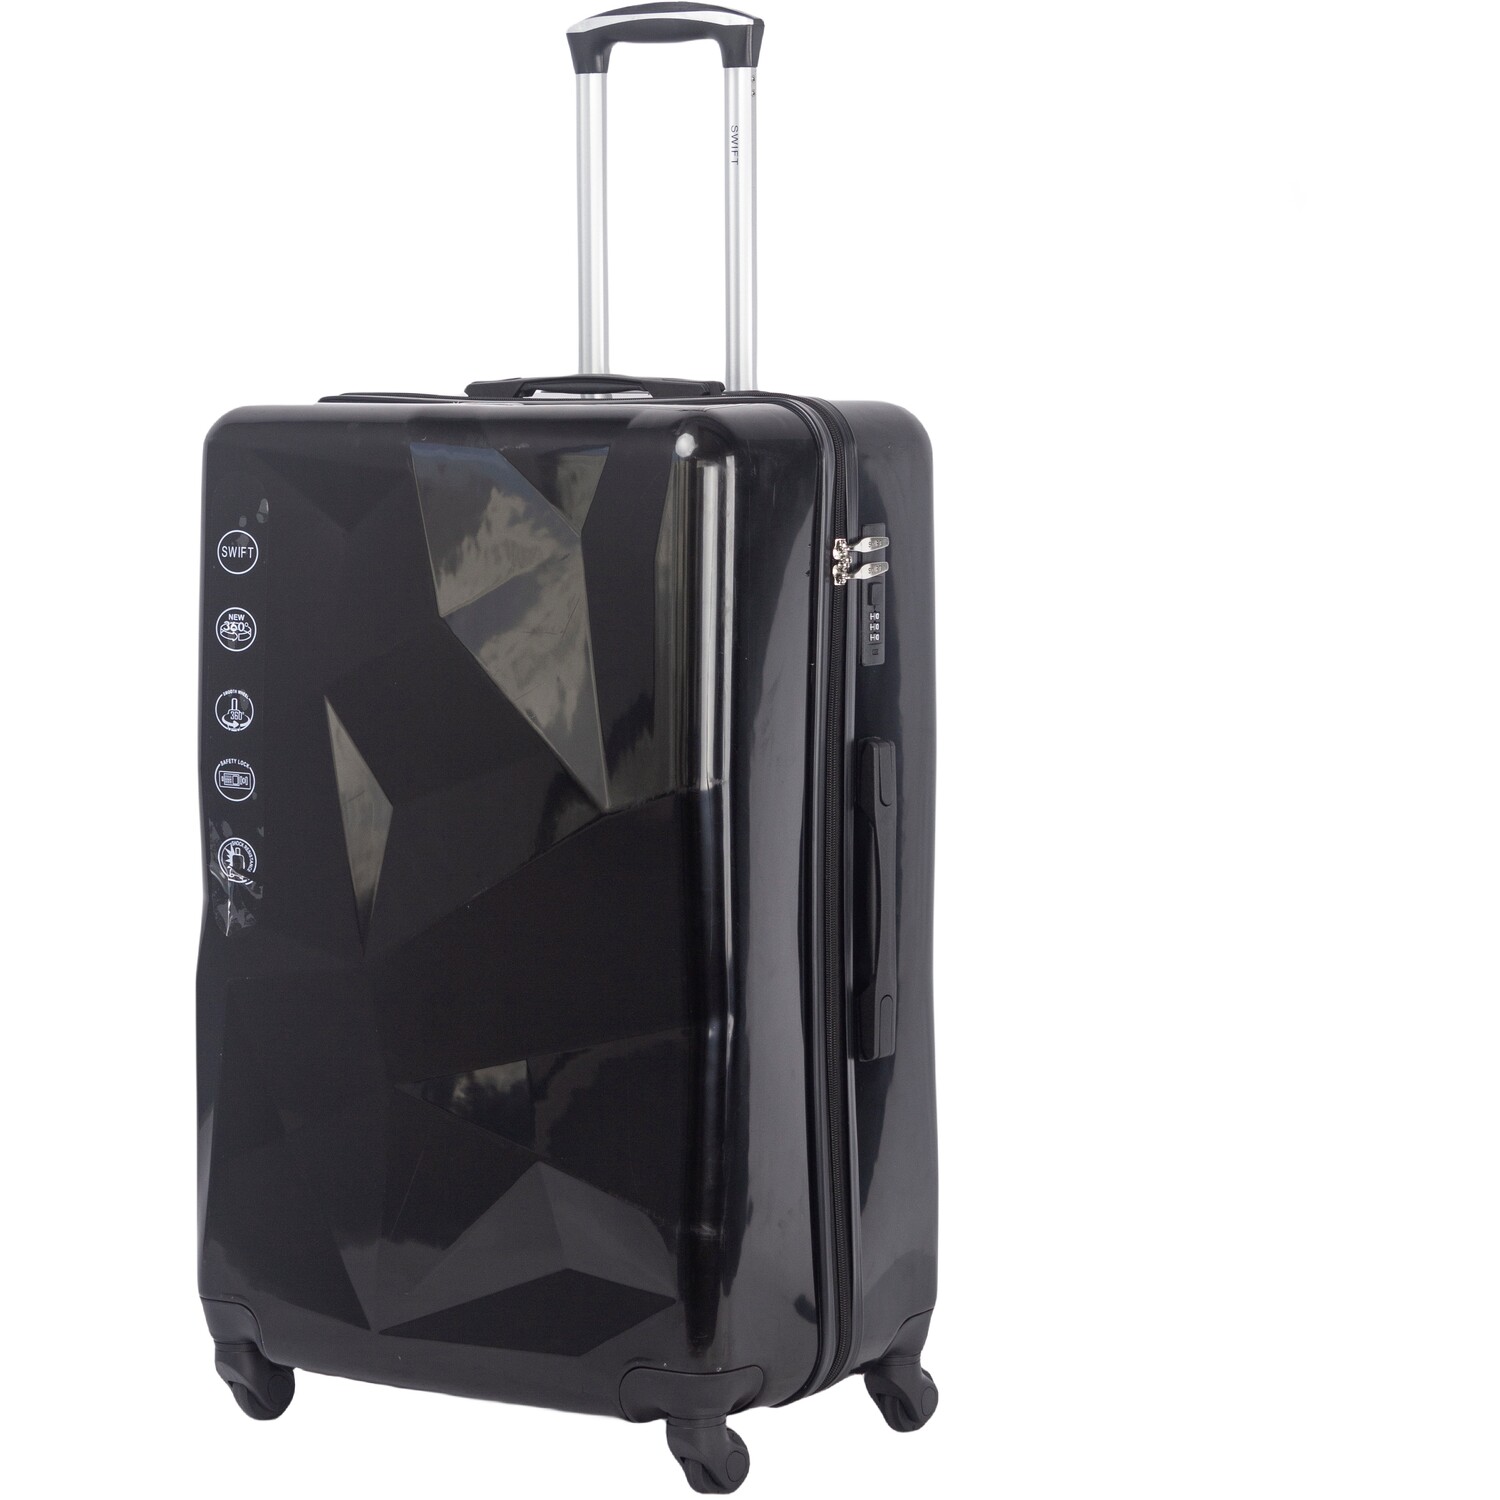 Swift Comet Suitcase - Black / Cabin Case Image 2